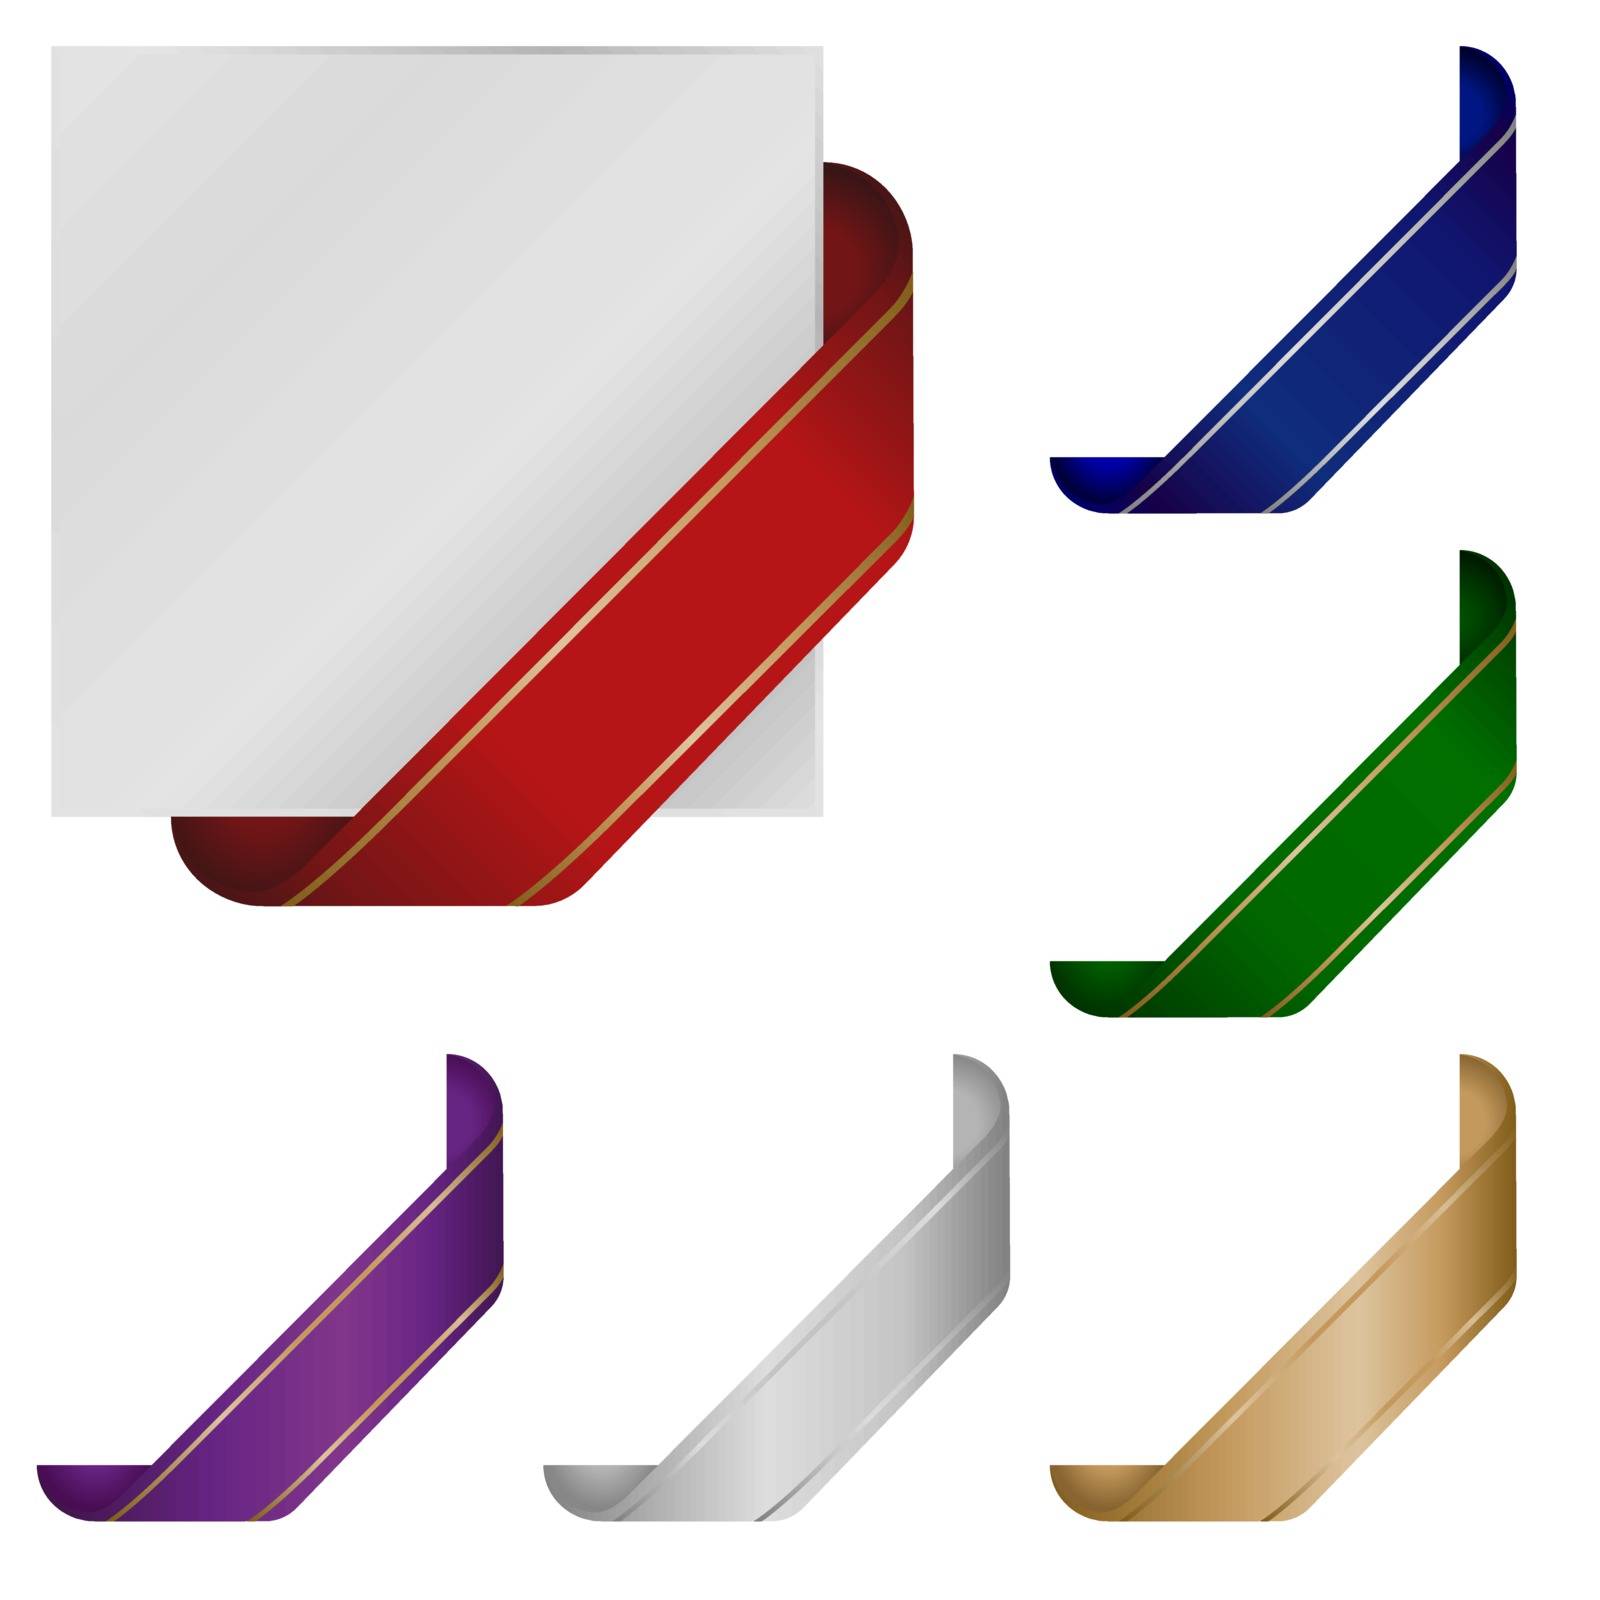 Blank corner ribbons in various colors by jamdesign